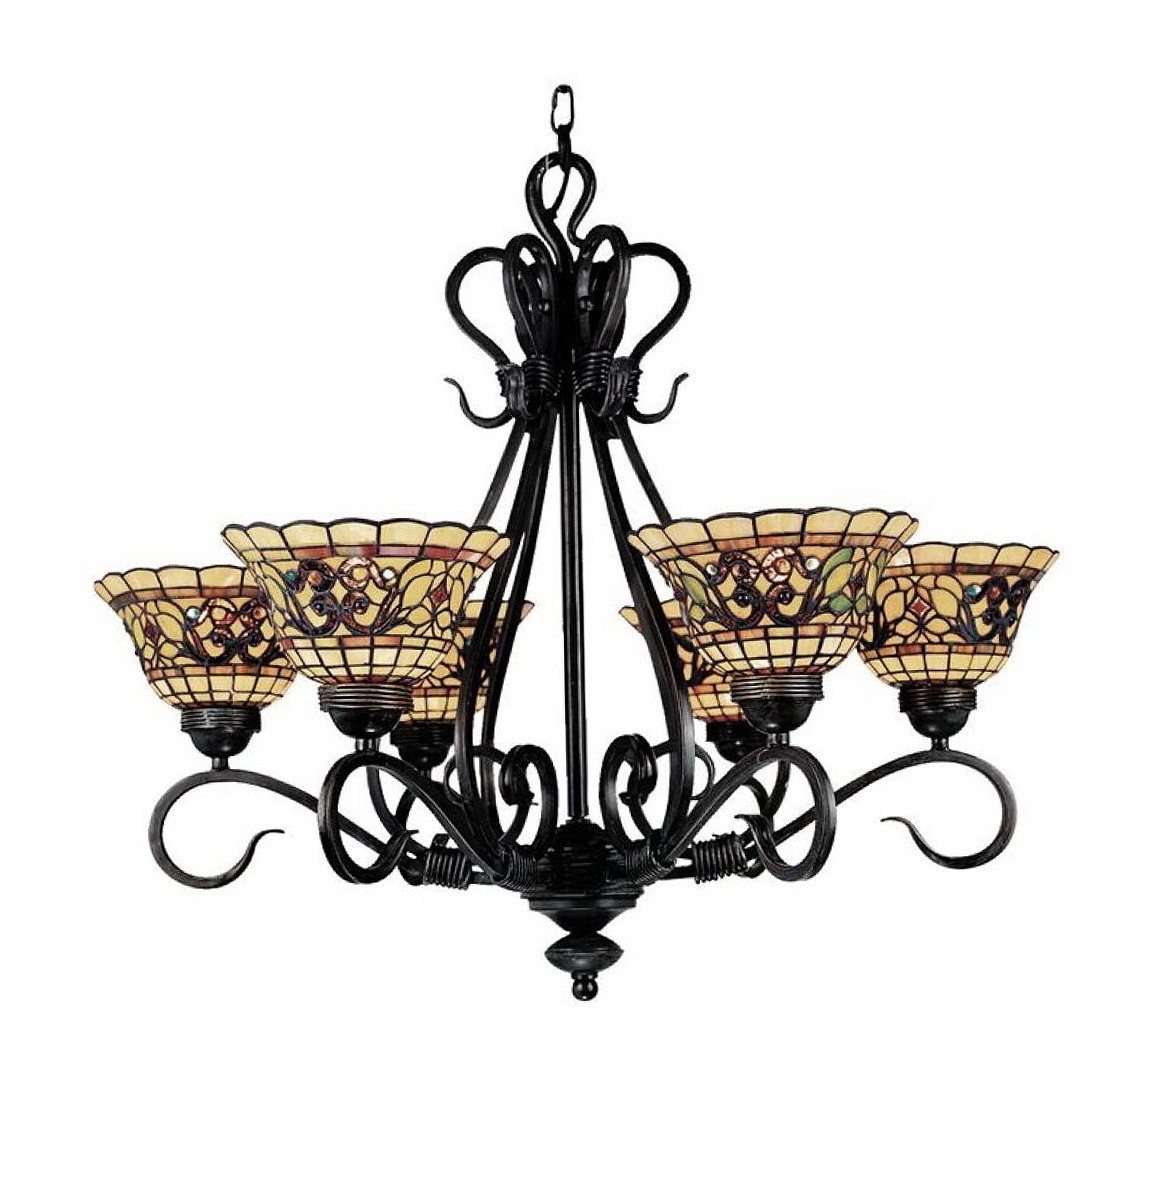 Antique tiffany style chandelier home design ideas